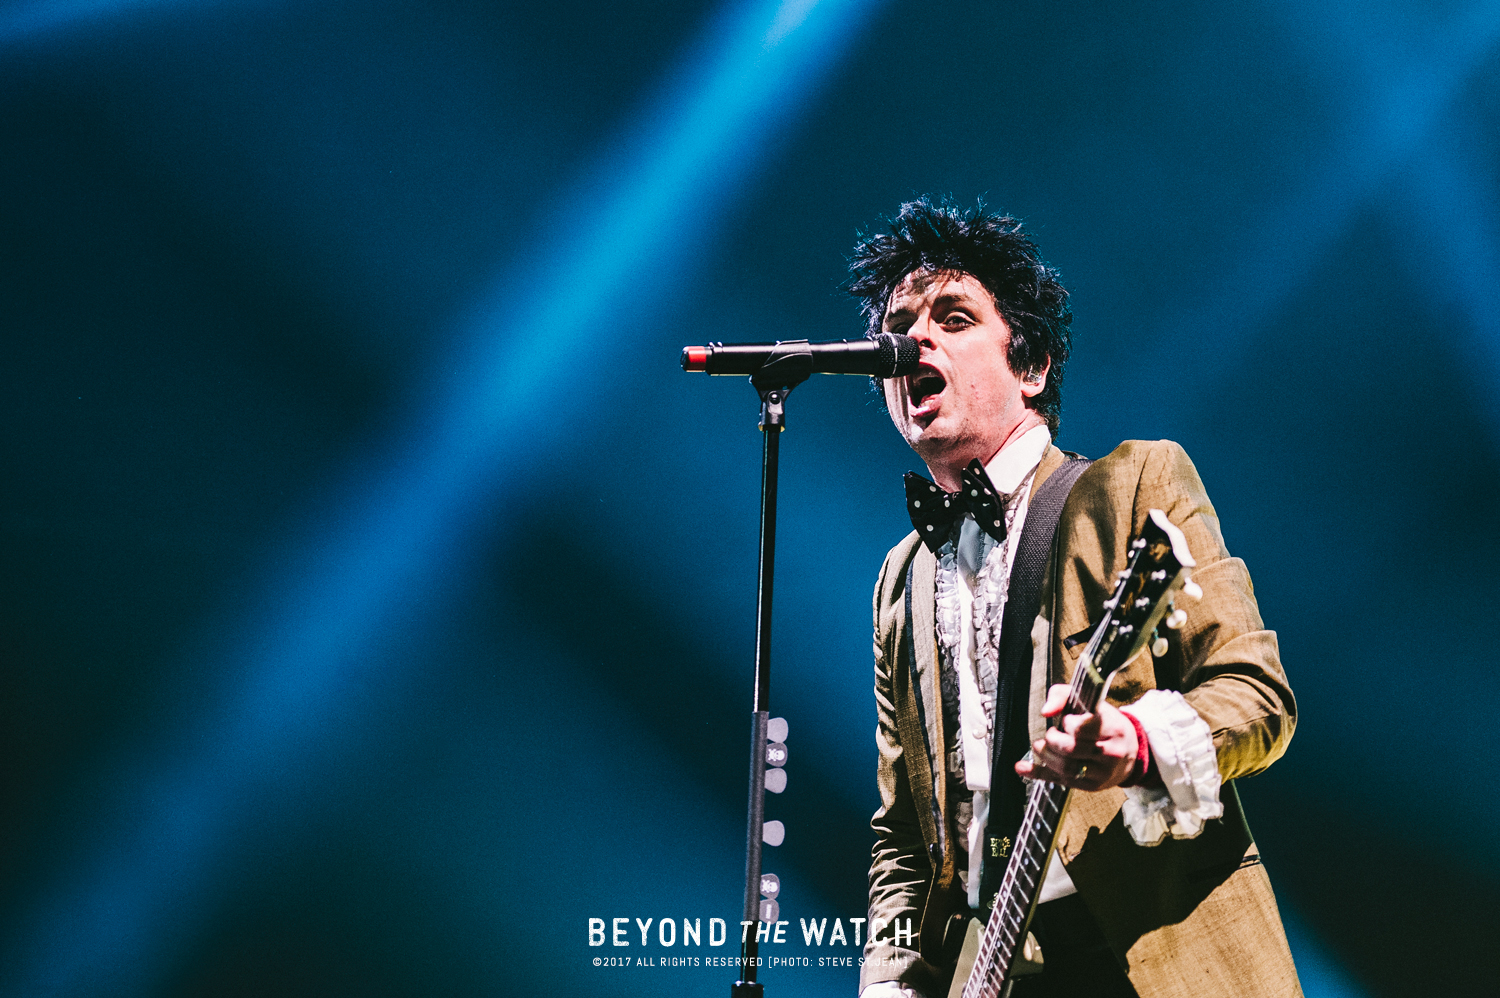  Billie Joe Armstrong of Green Day 